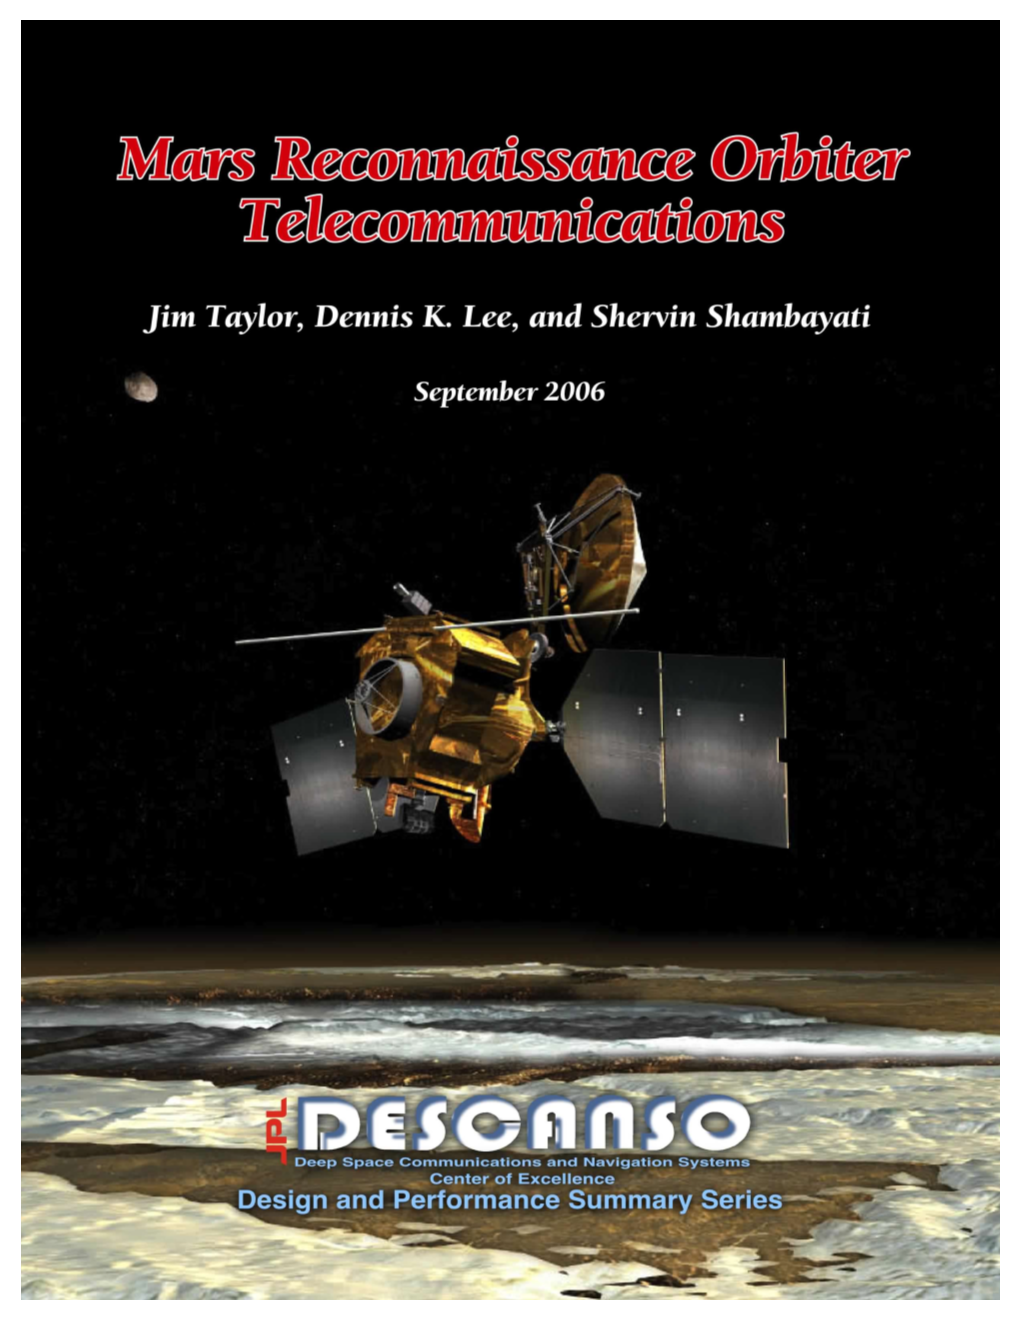 Article 12 Mars Reconnaissance Orbiter Telecommunications